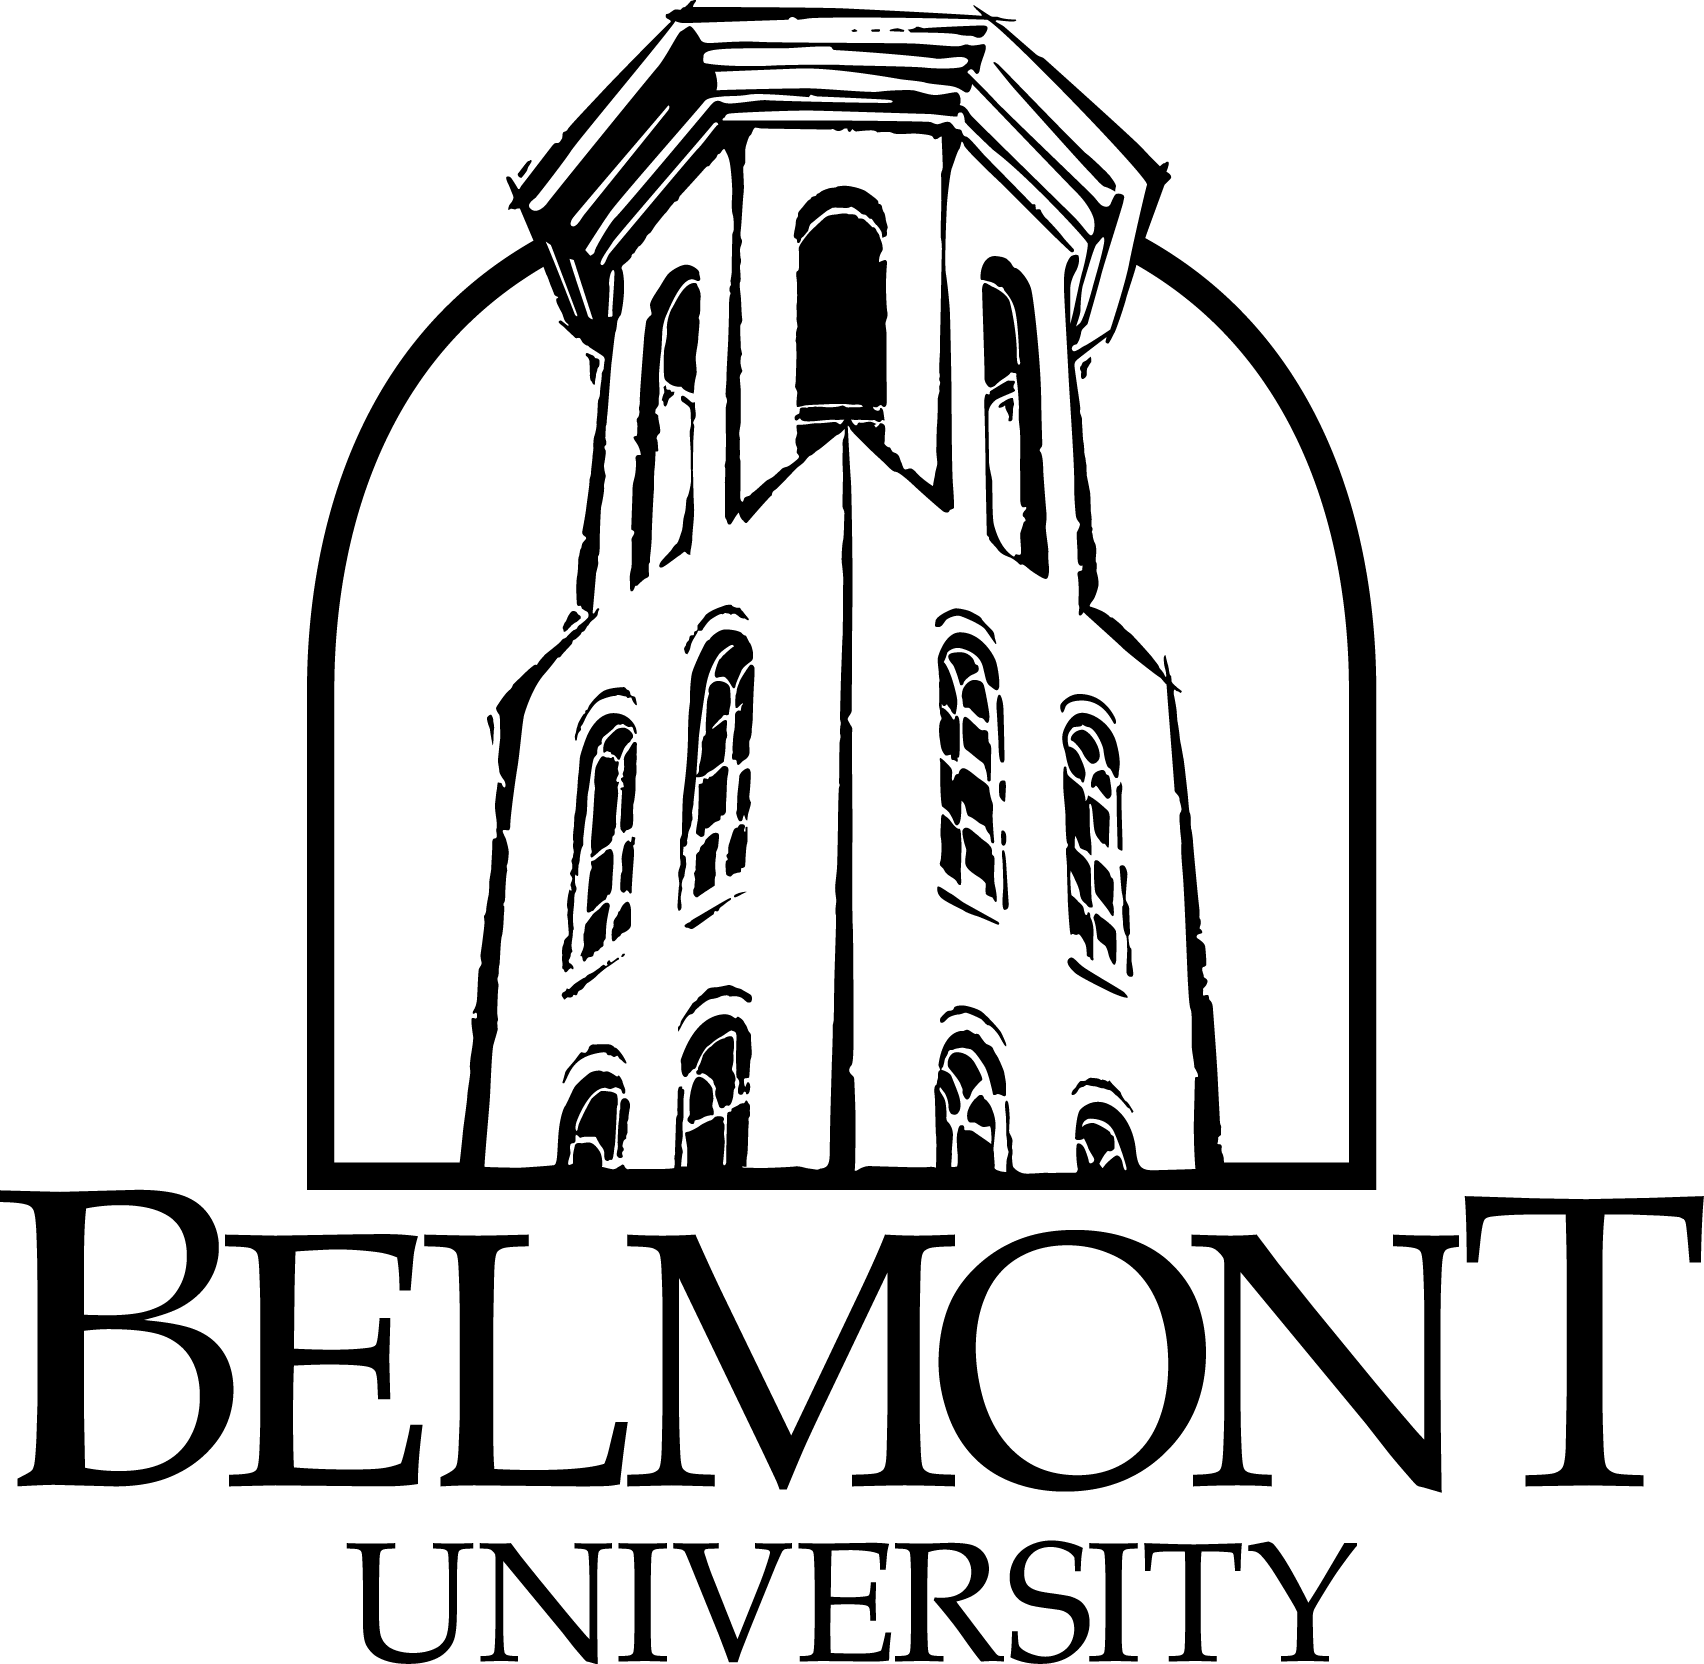 Belmont Entertainment Law Journal